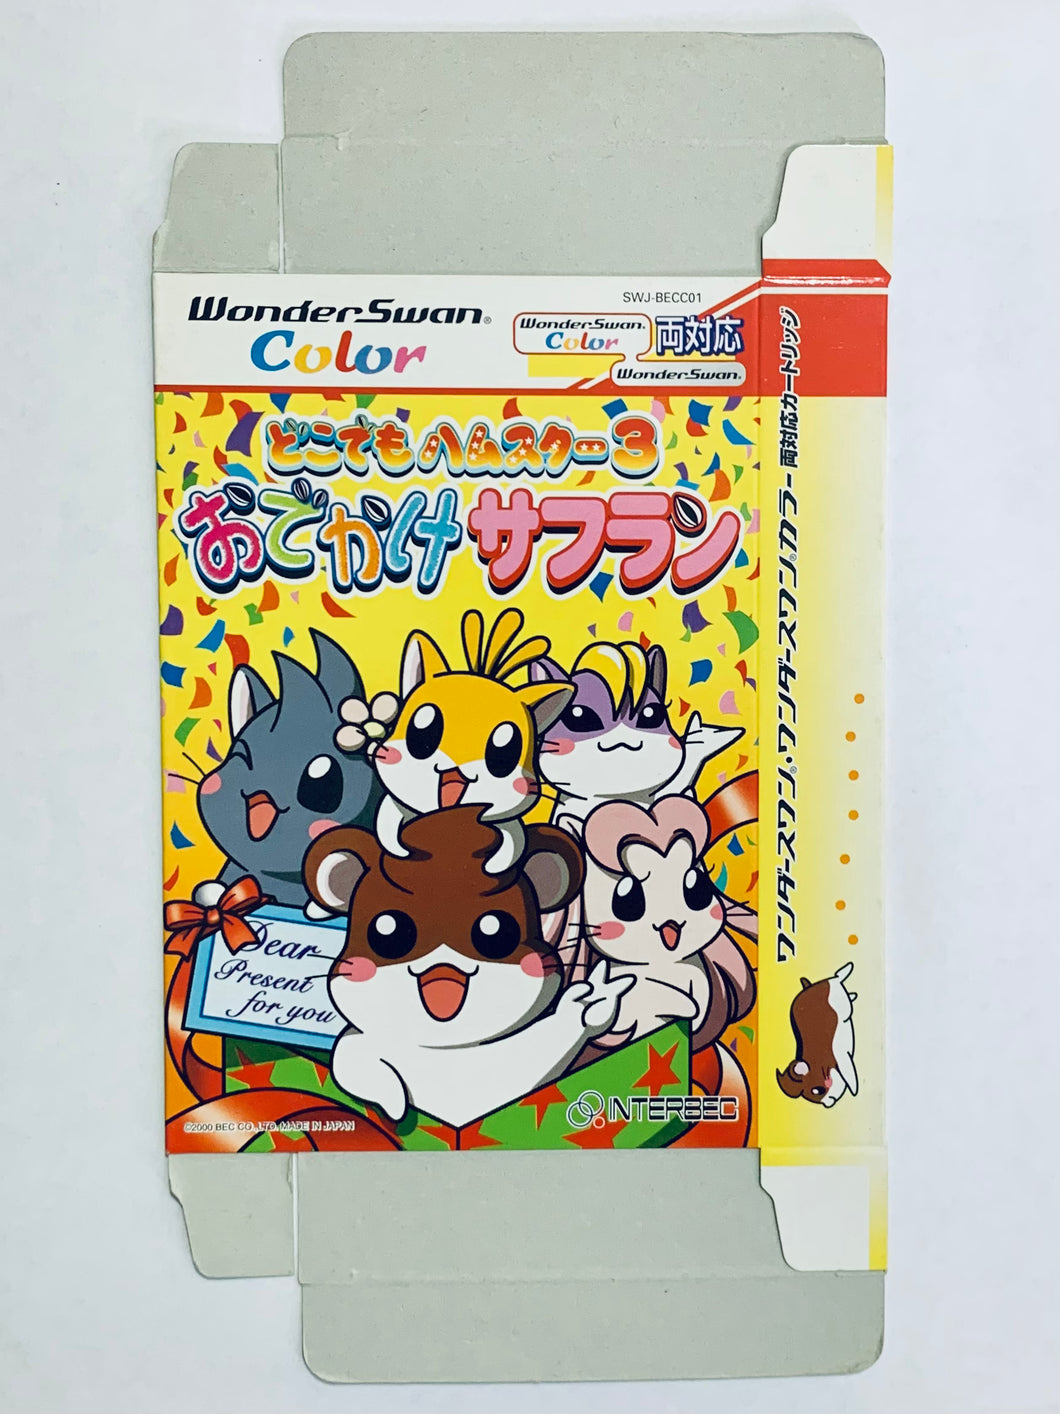 Dokodemo Hamster 3 - WonderSwan Color - WSC - JP - Box Only (SWJ-BECC01)